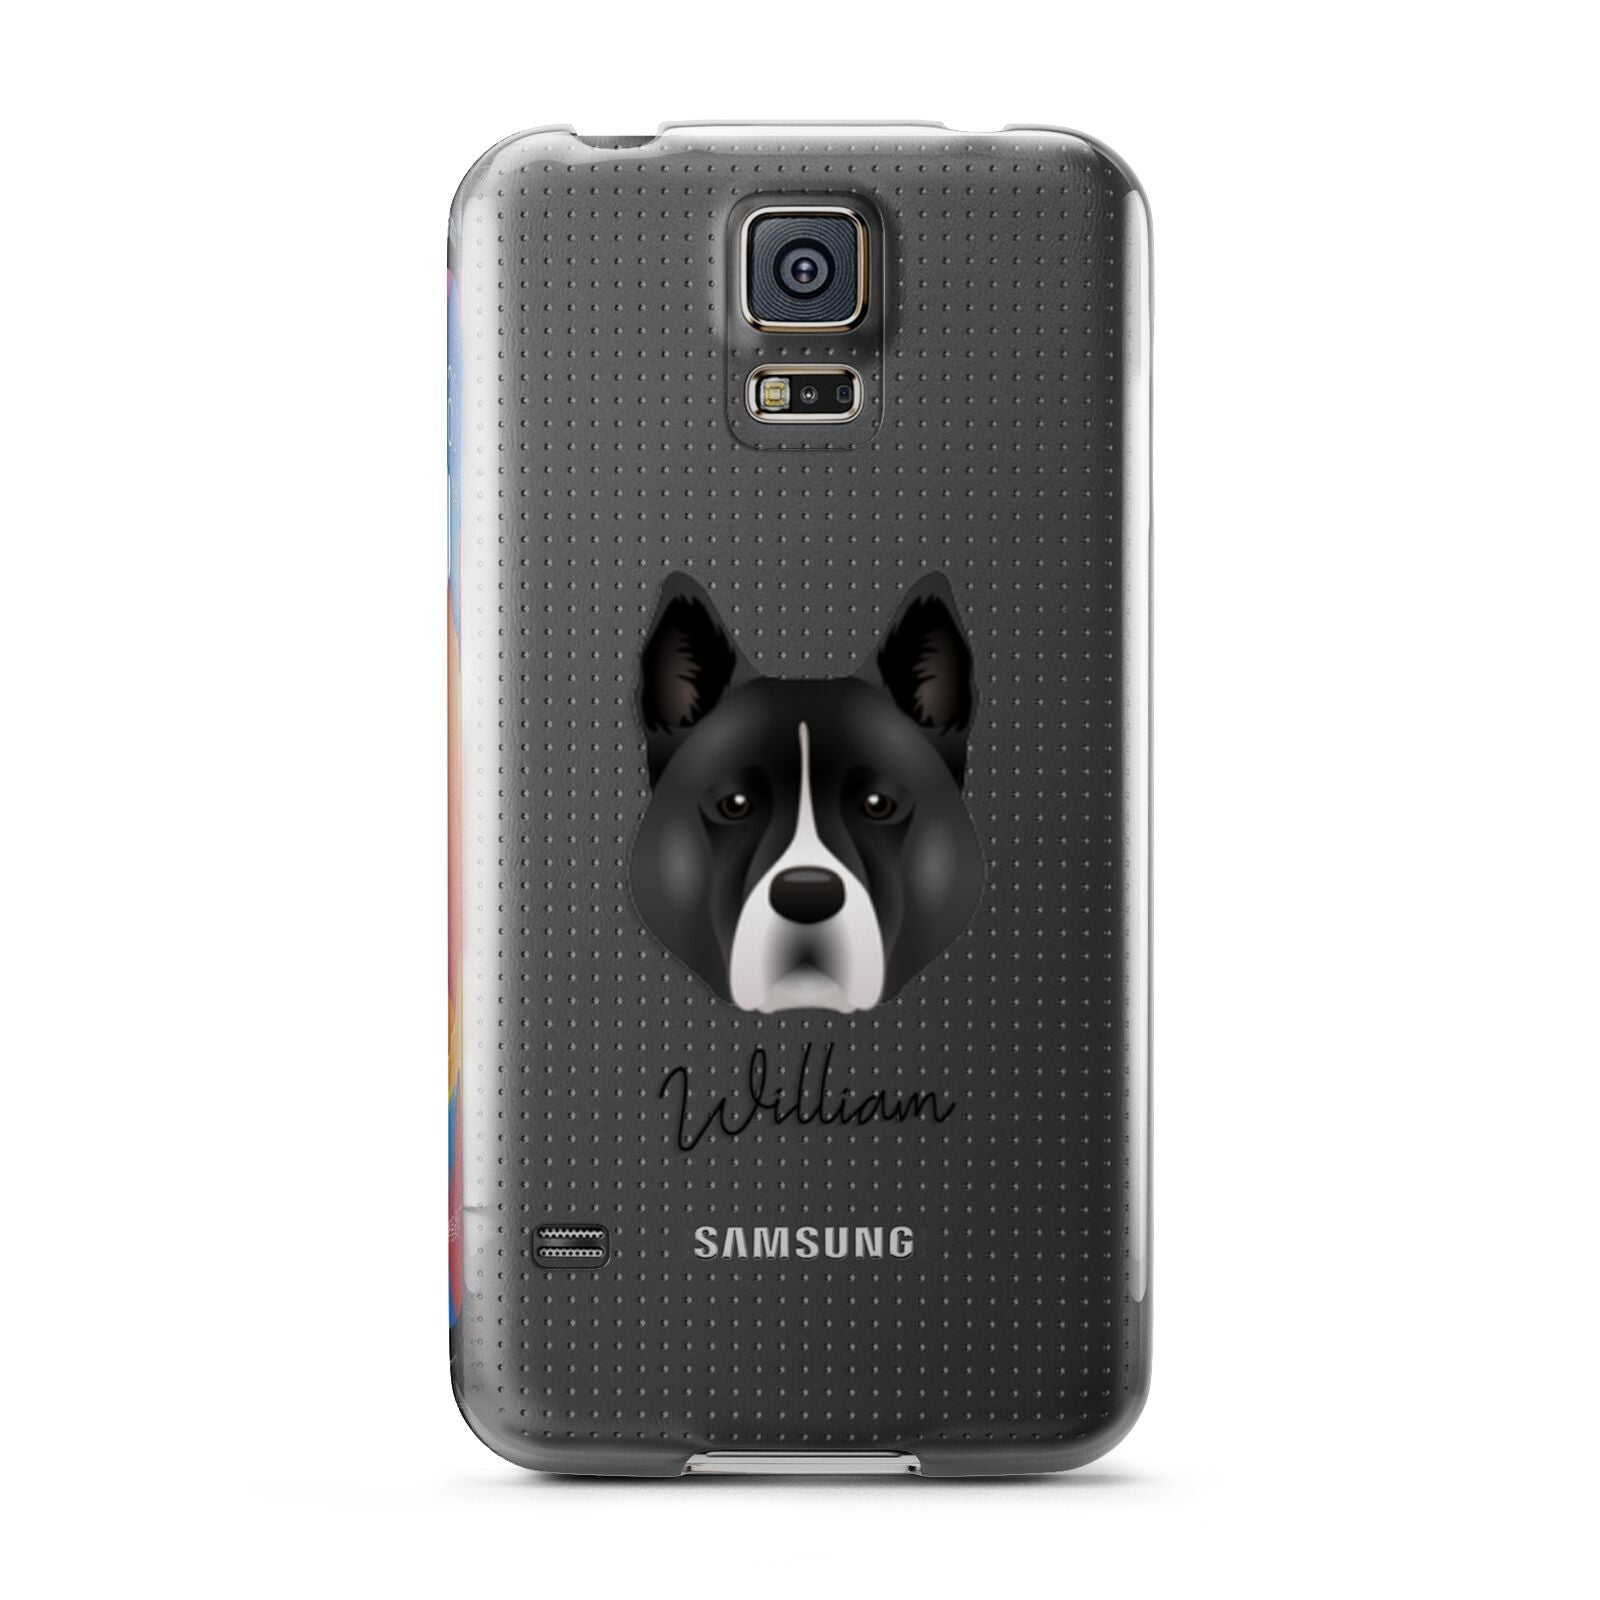 Akita Personalised Samsung Galaxy S5 Case